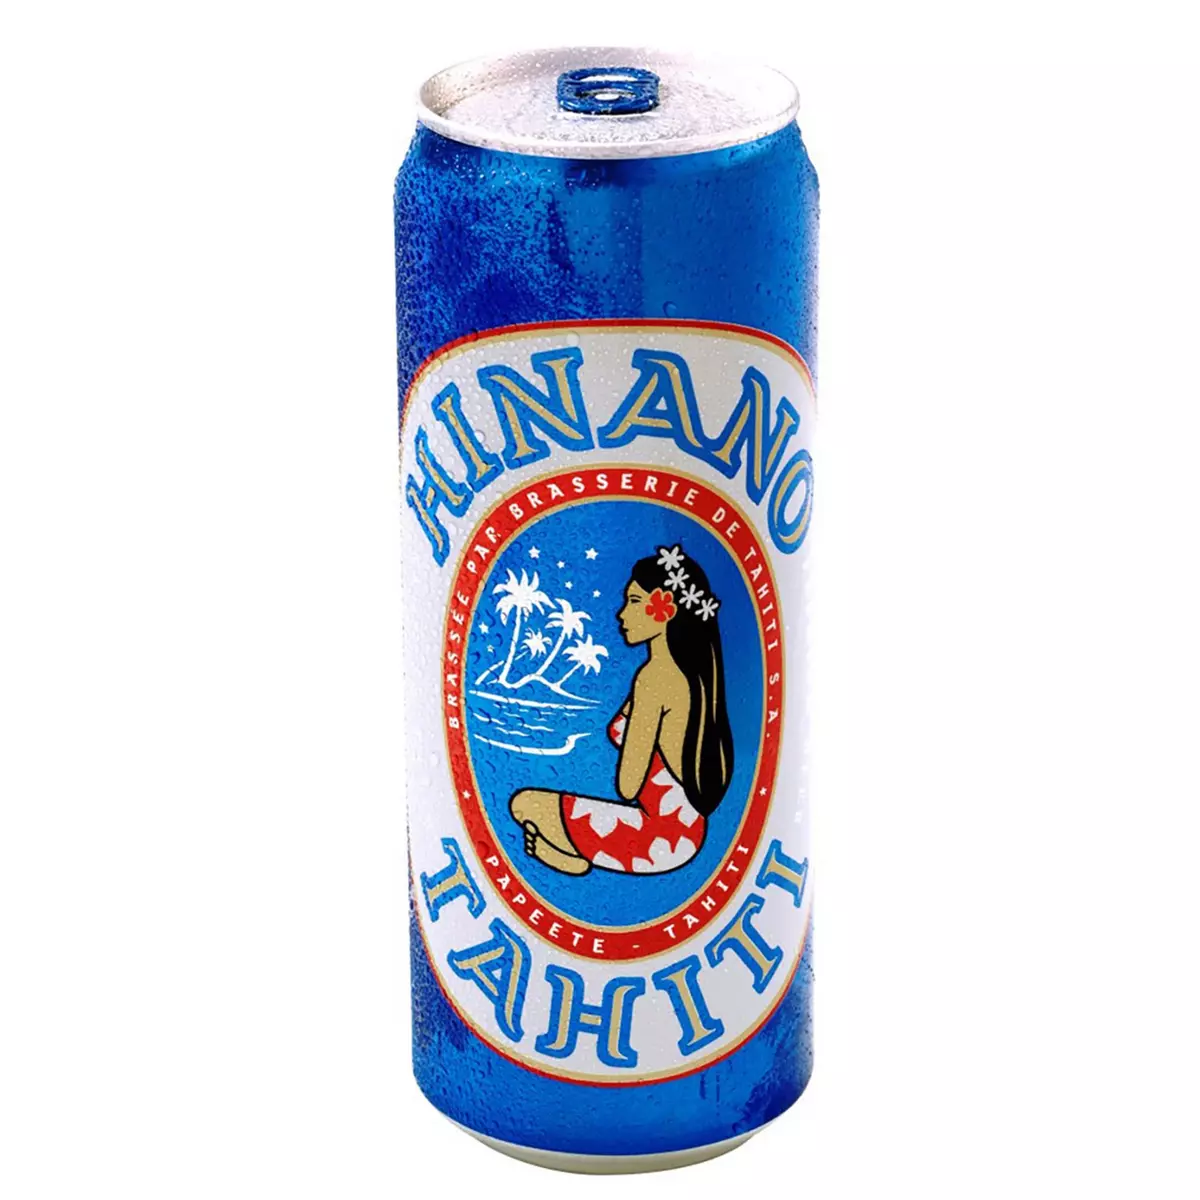 HINANO Bière blonde de Tahiti 5% boîte 50cl